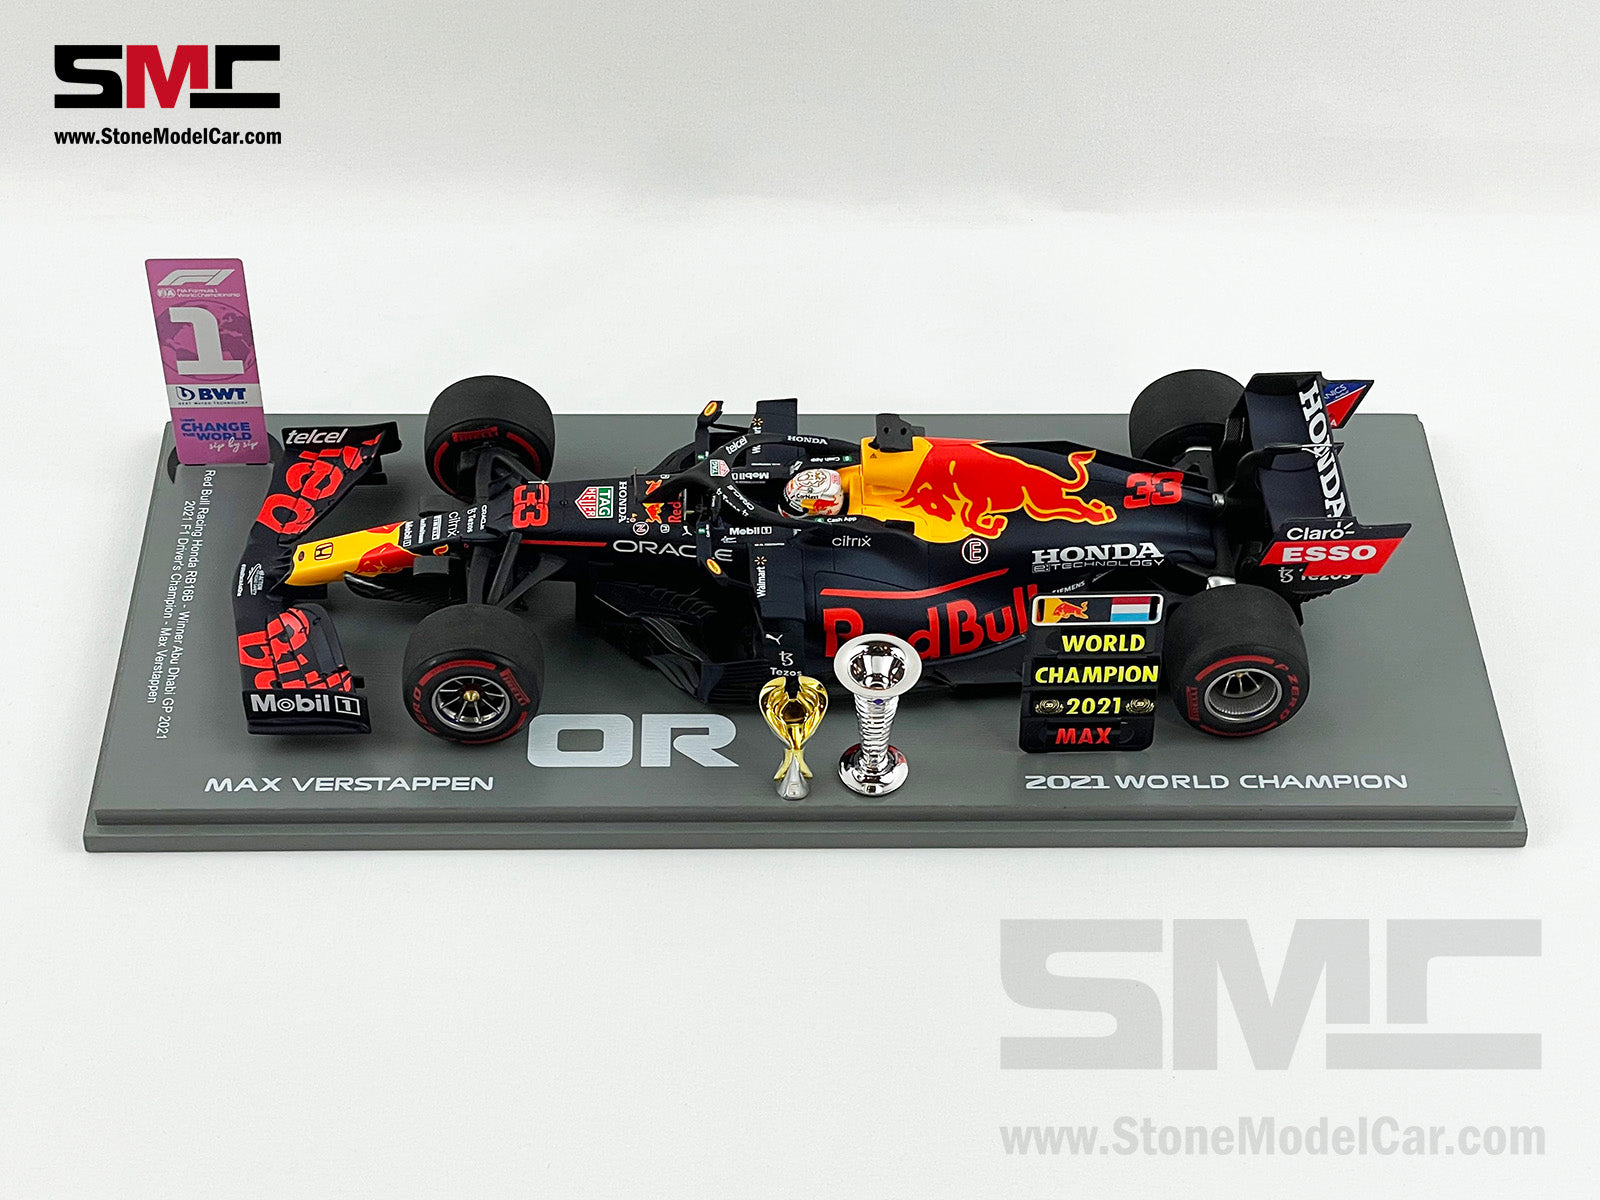 2021 F1 World Champion #33 Max Verstappen Red Bull RB16B Abu Dhabi 